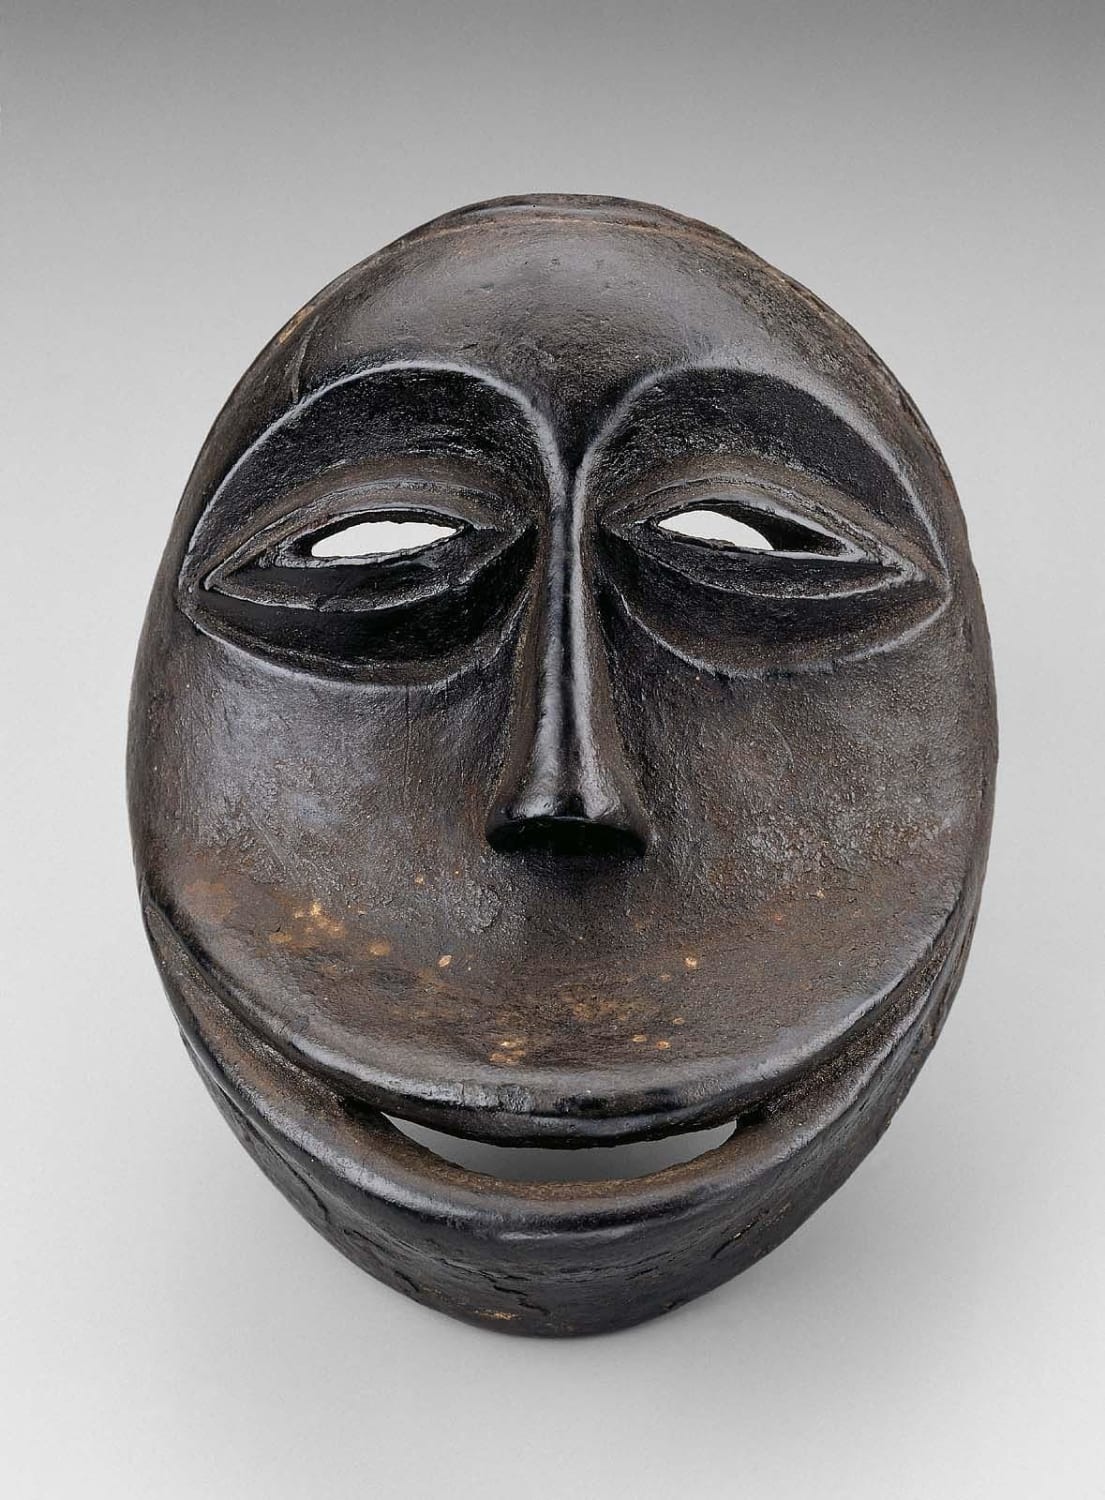 So'o mask representing a chimpanzee-human, Hemba people, Democratic Republic of Congo, 20th century